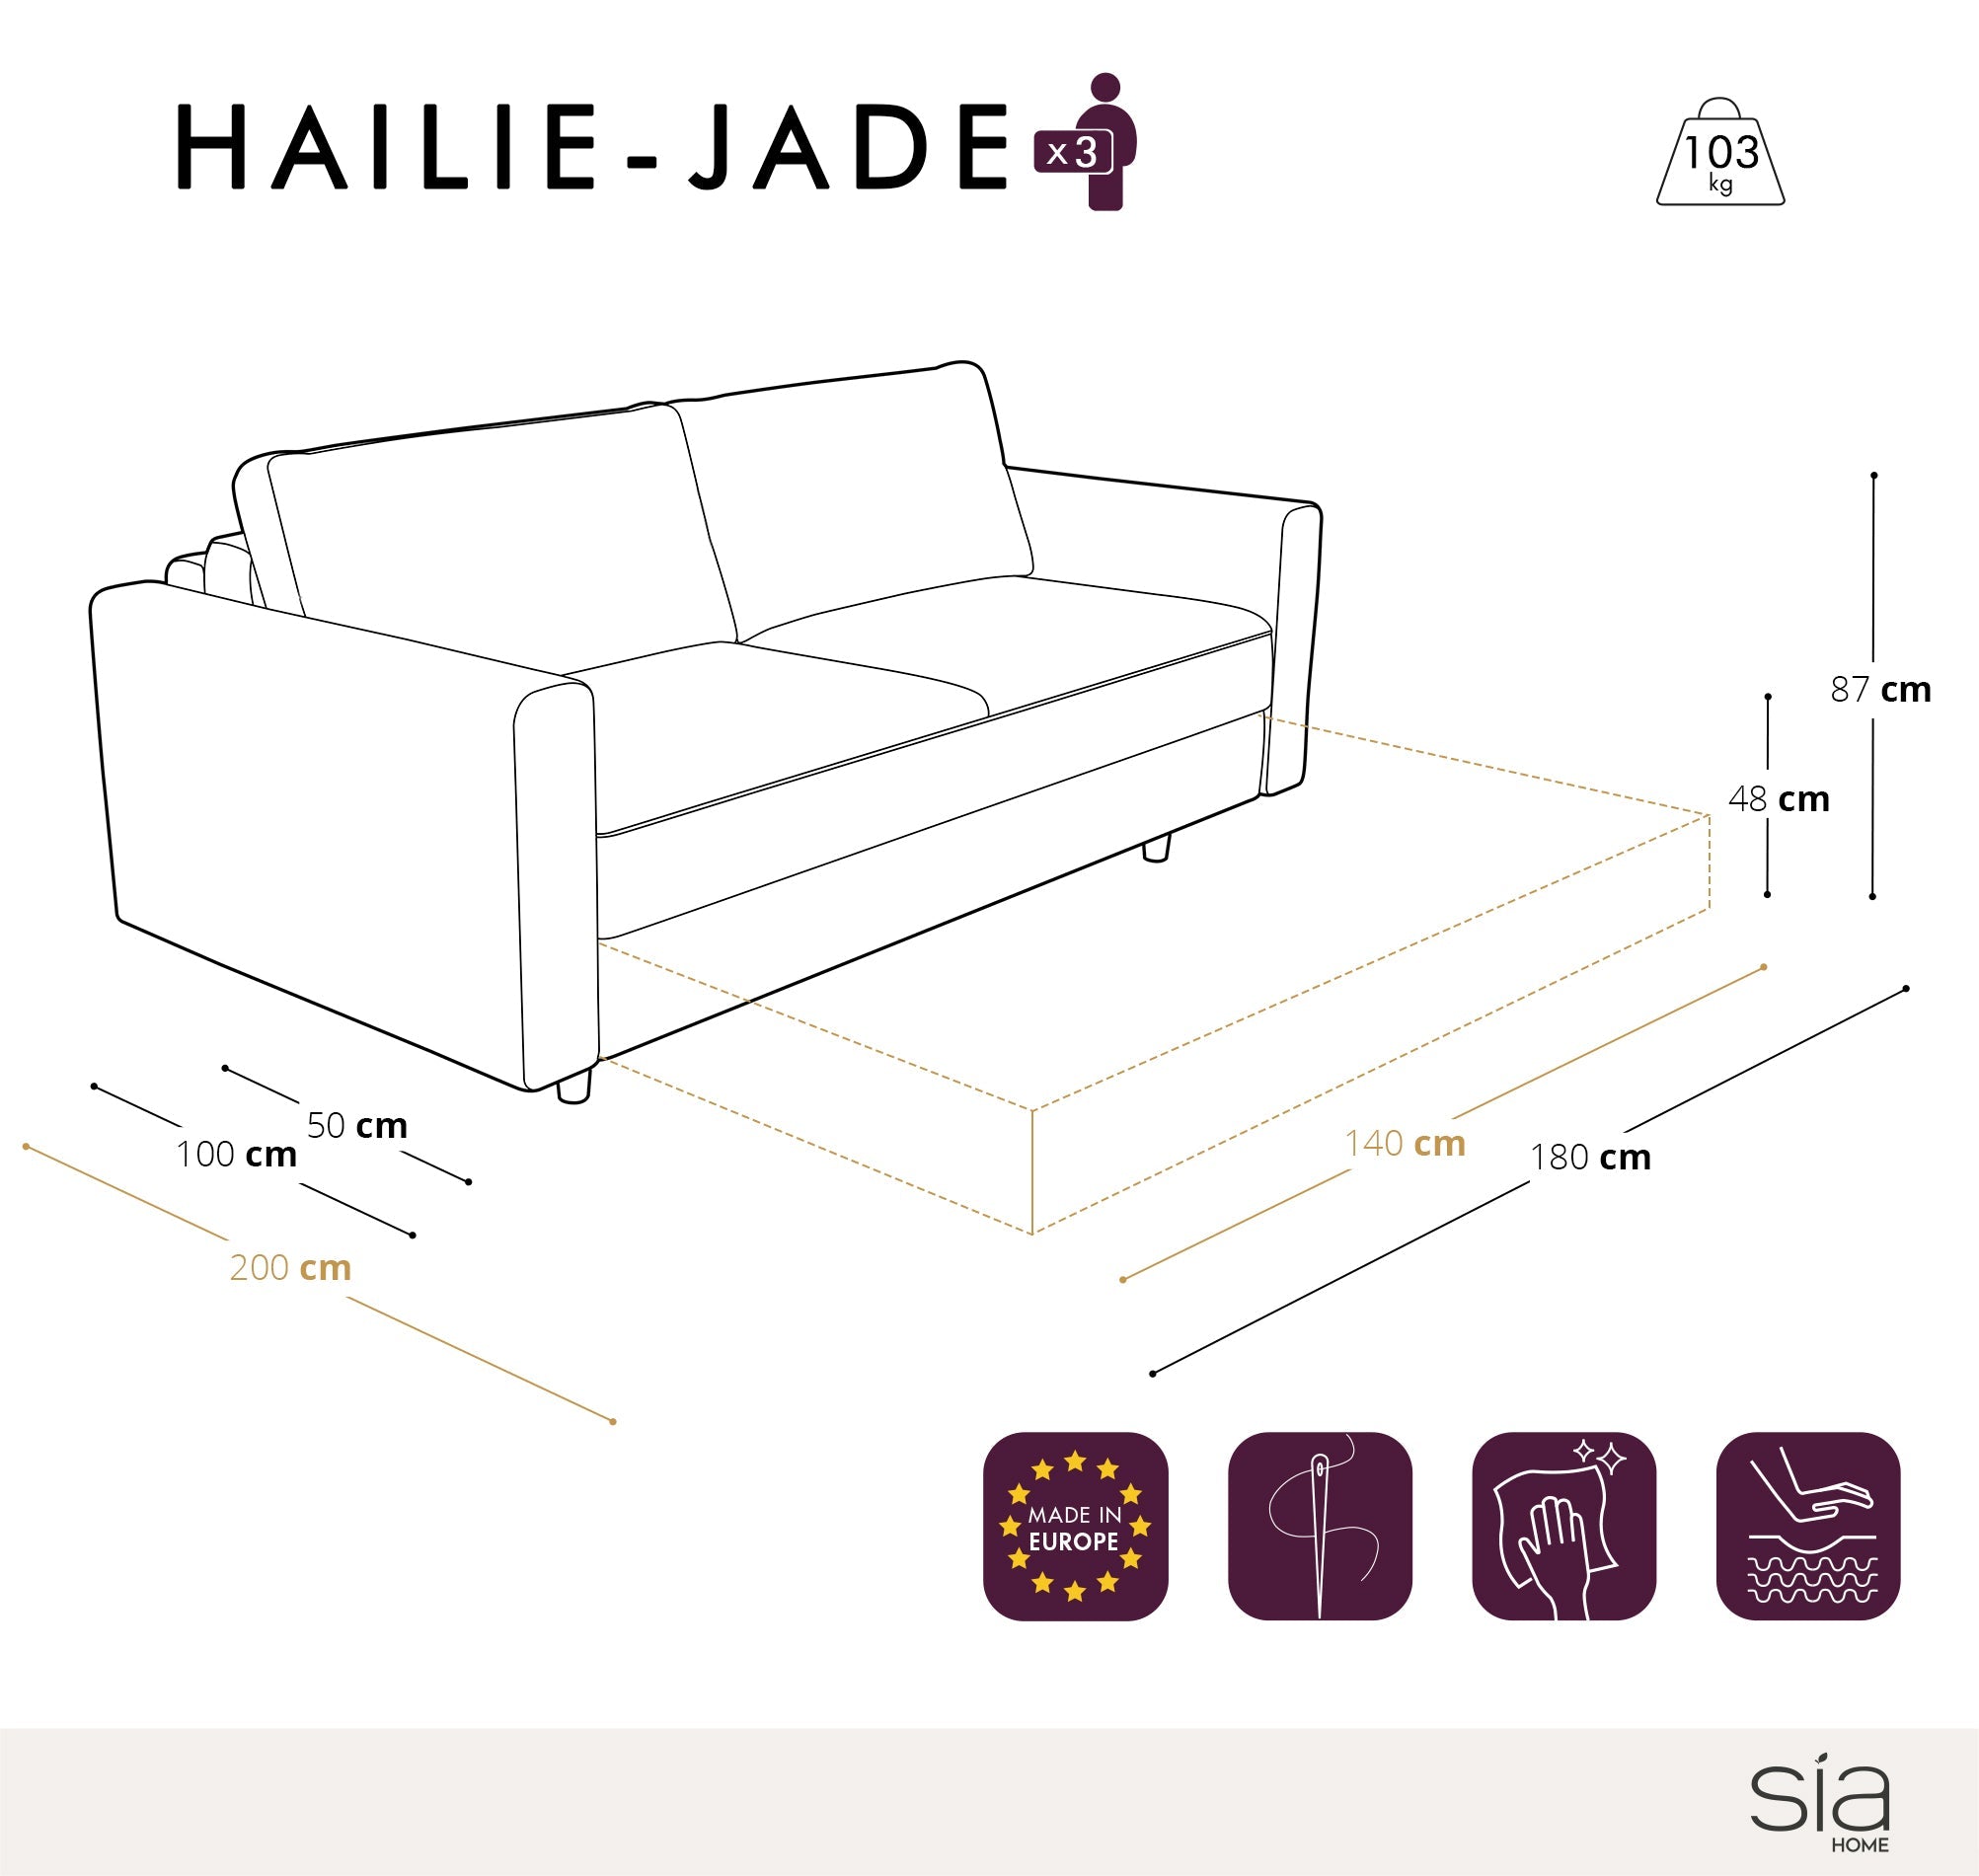 Canapé Convertible Hailie-Jade